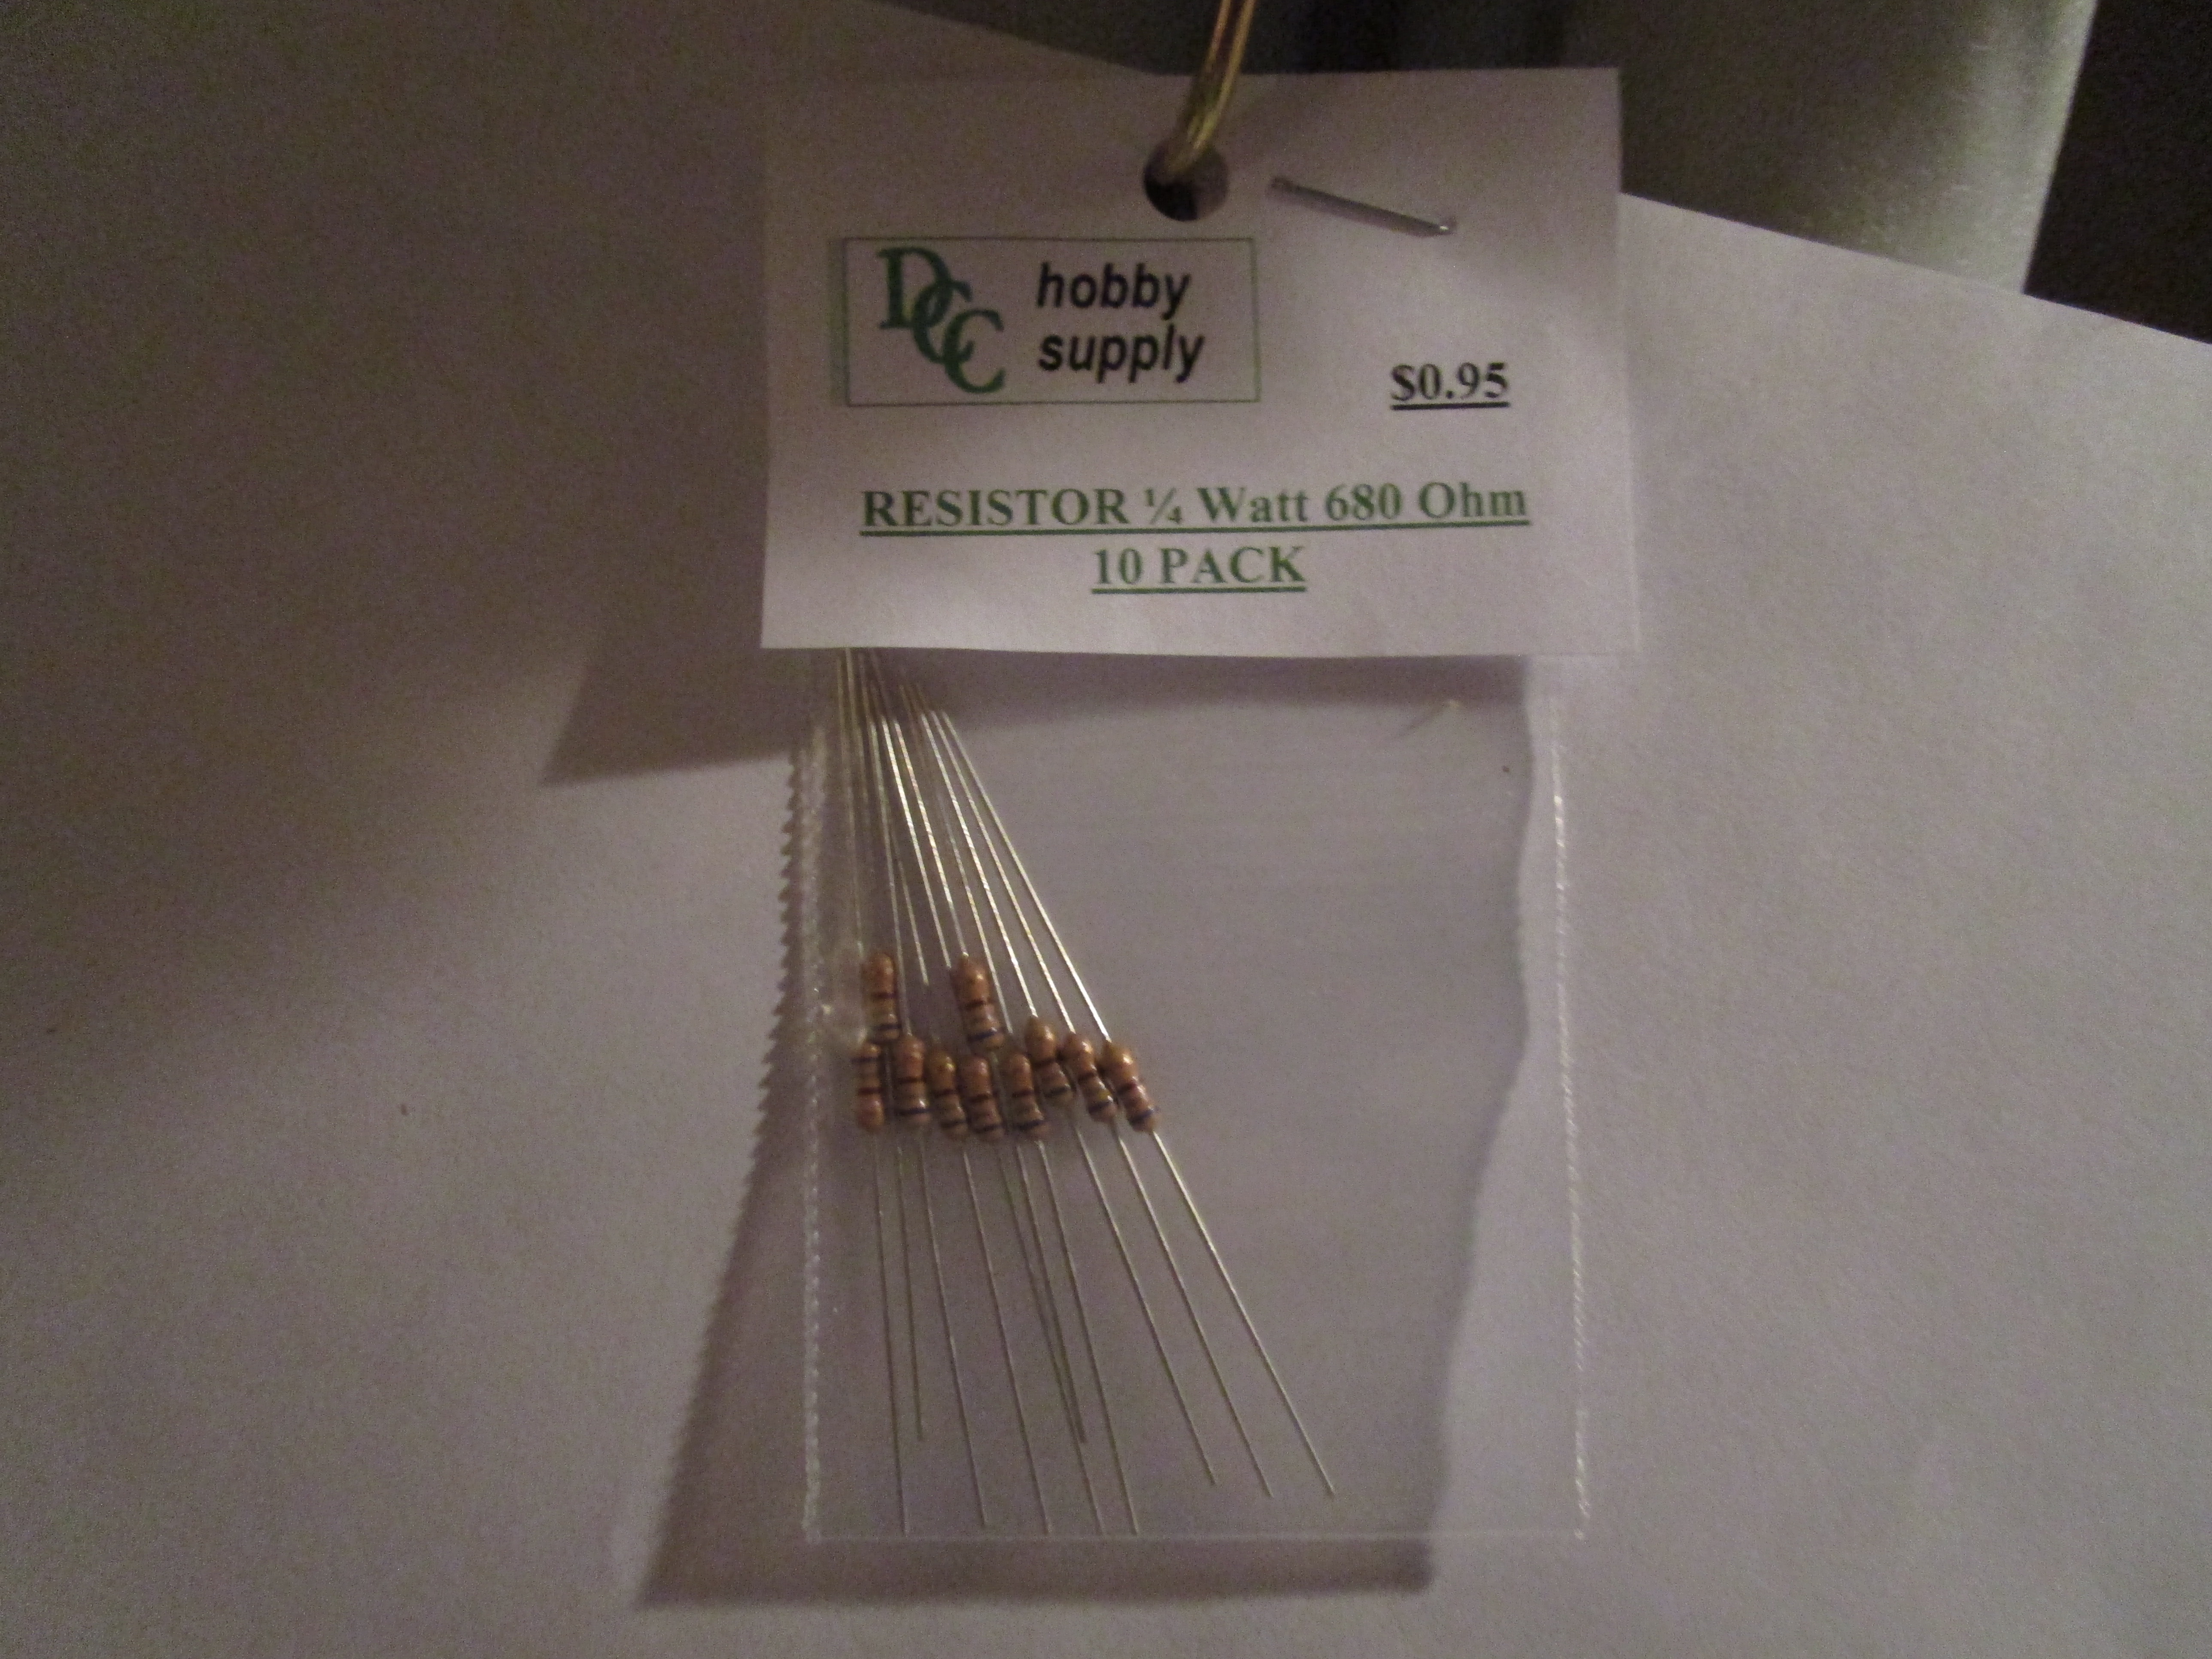 Resistor, 1/4 watt 680 Ohm (10 pack) - Click Image to Close